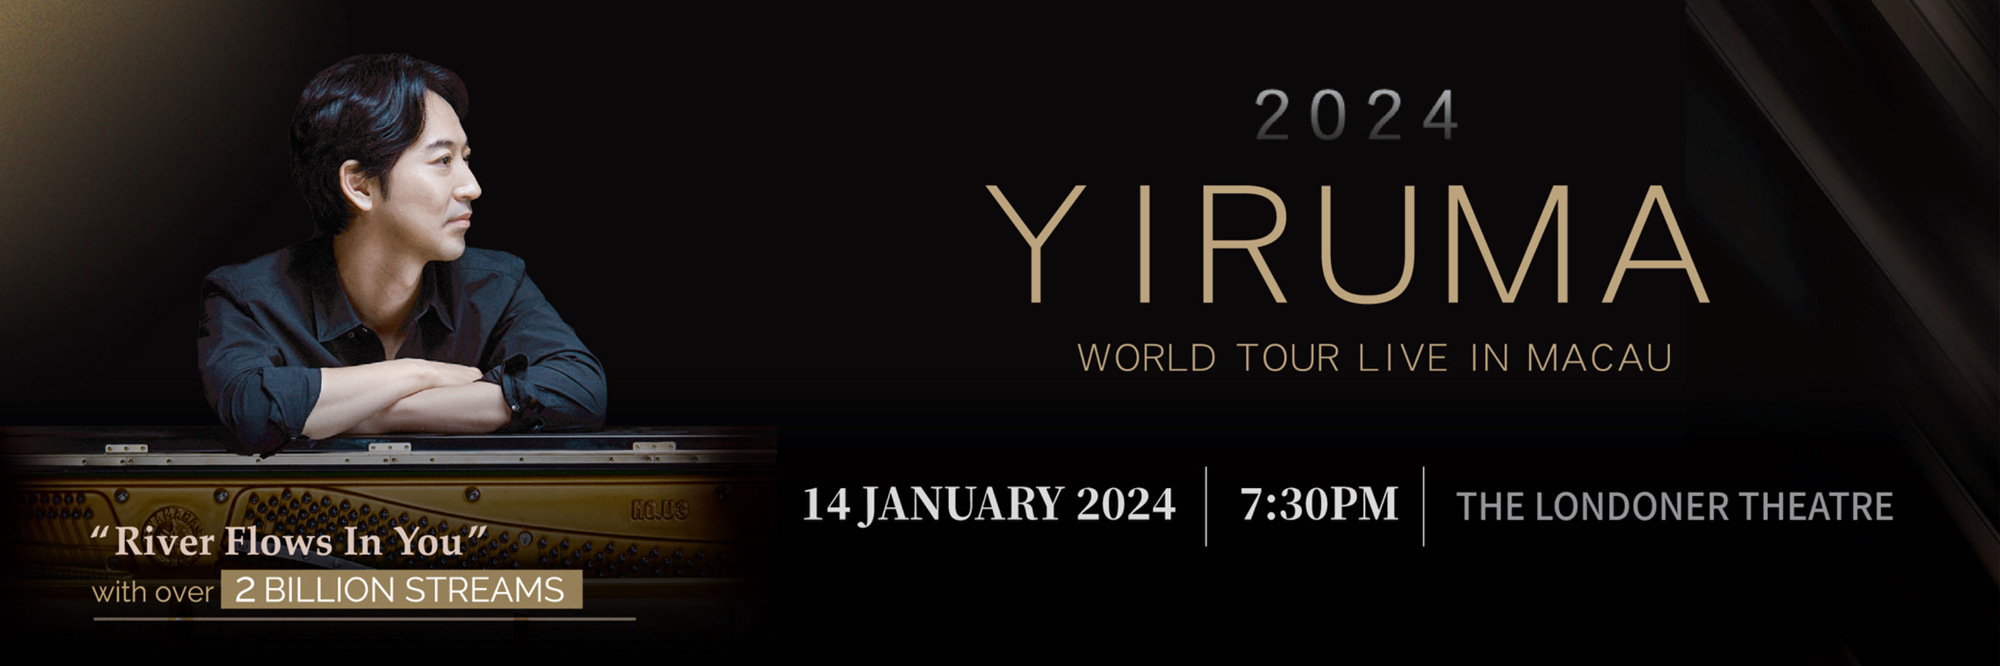 Yiruma 2024 World Tour Live in Macau 엔터테인먼트 The Londoner Macao